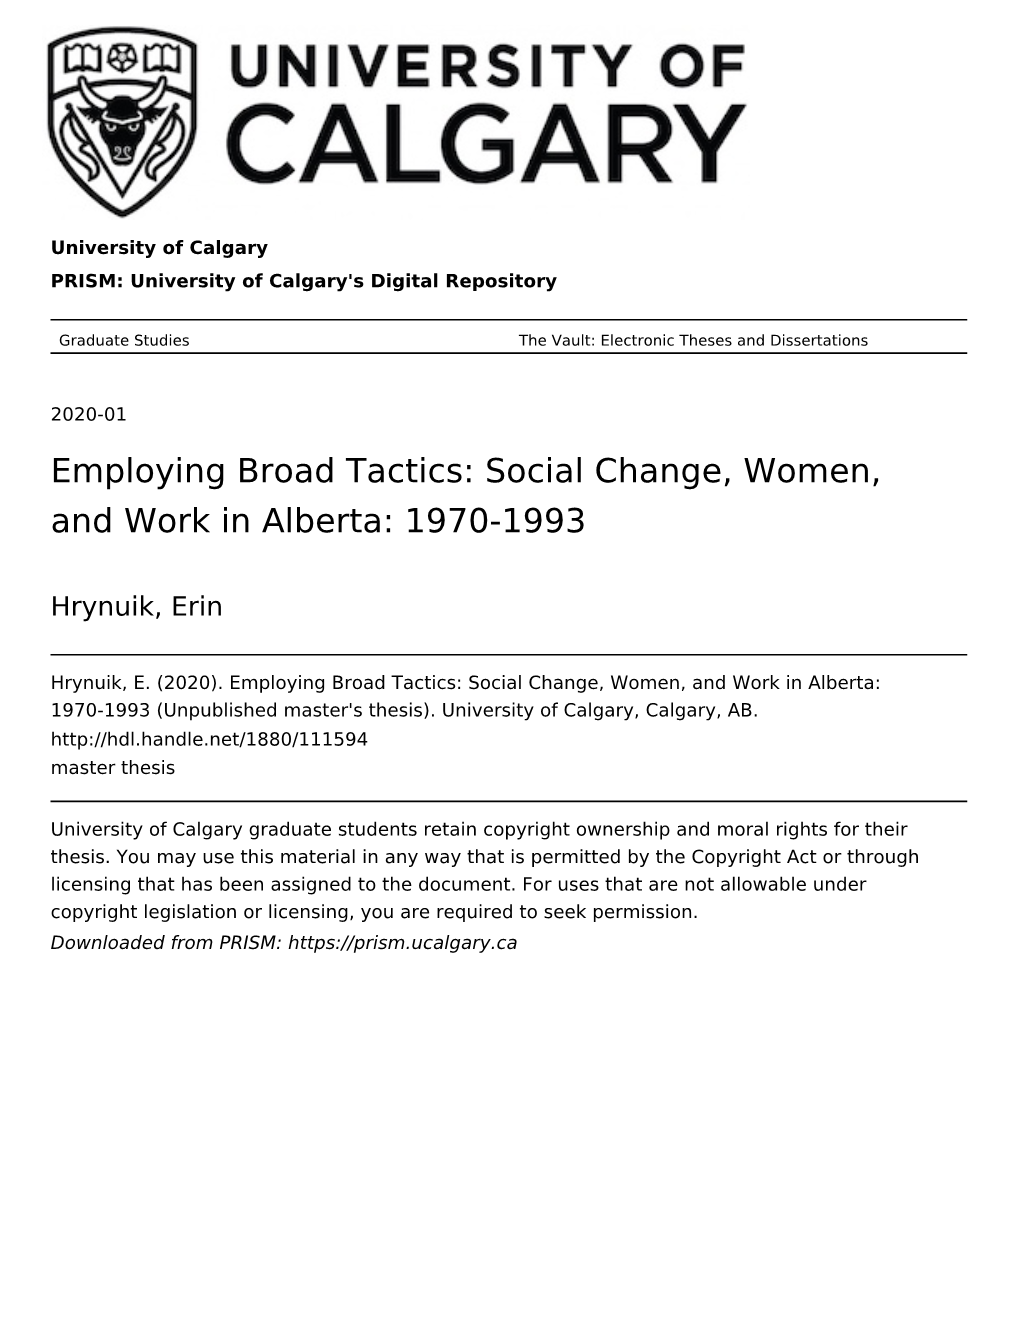 Social Change, Women, and Work in Alberta: 1970-1993